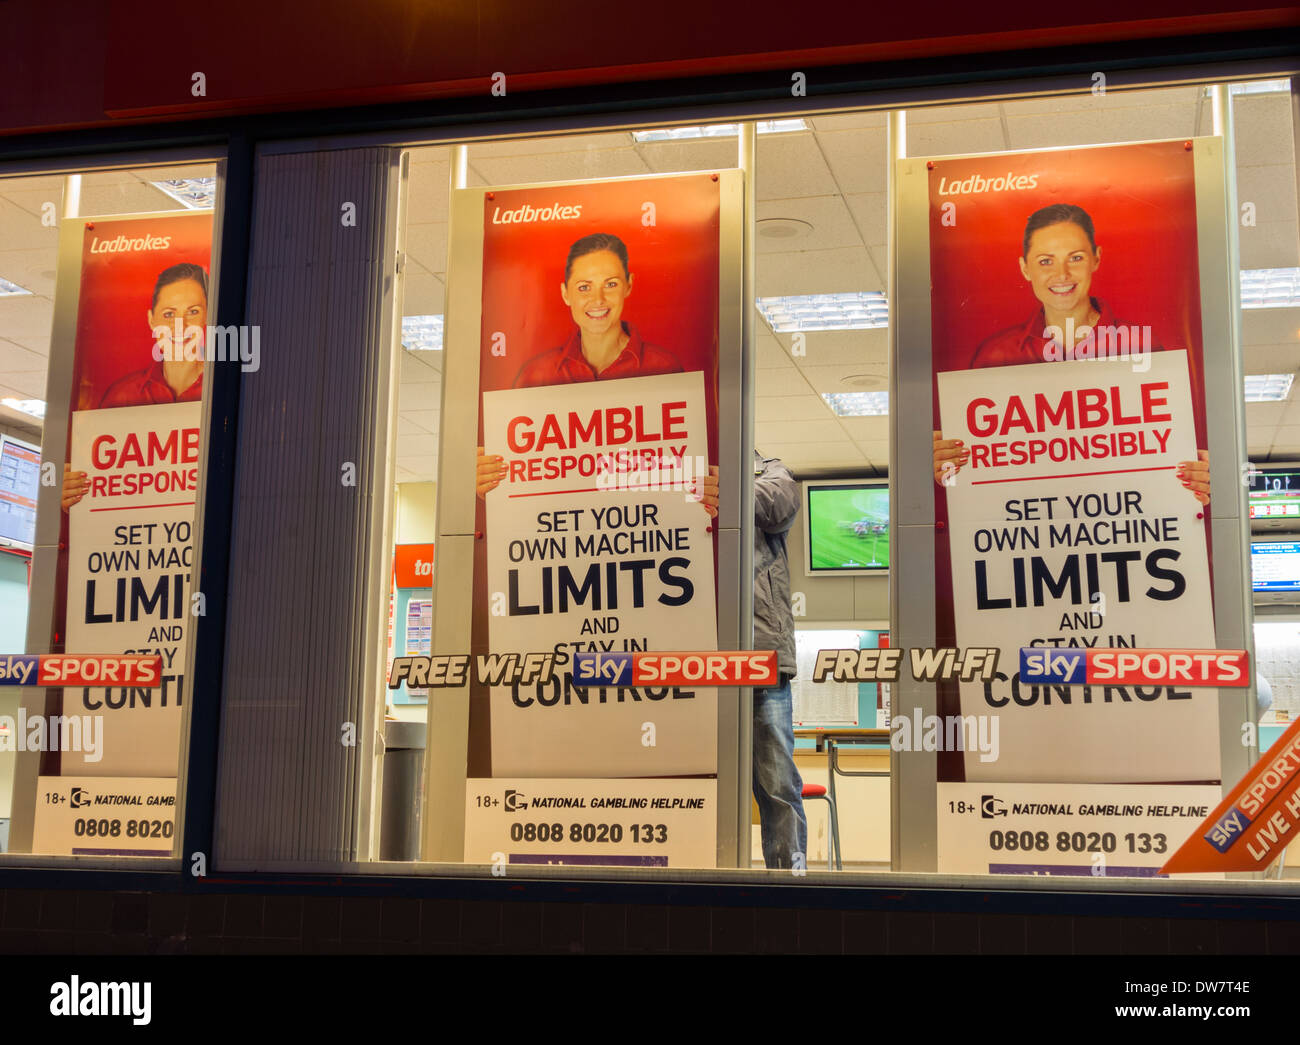 Gamble responsibly posters showing national gambling helpline number in Ladbrokes Bookmakers. Stock Photo